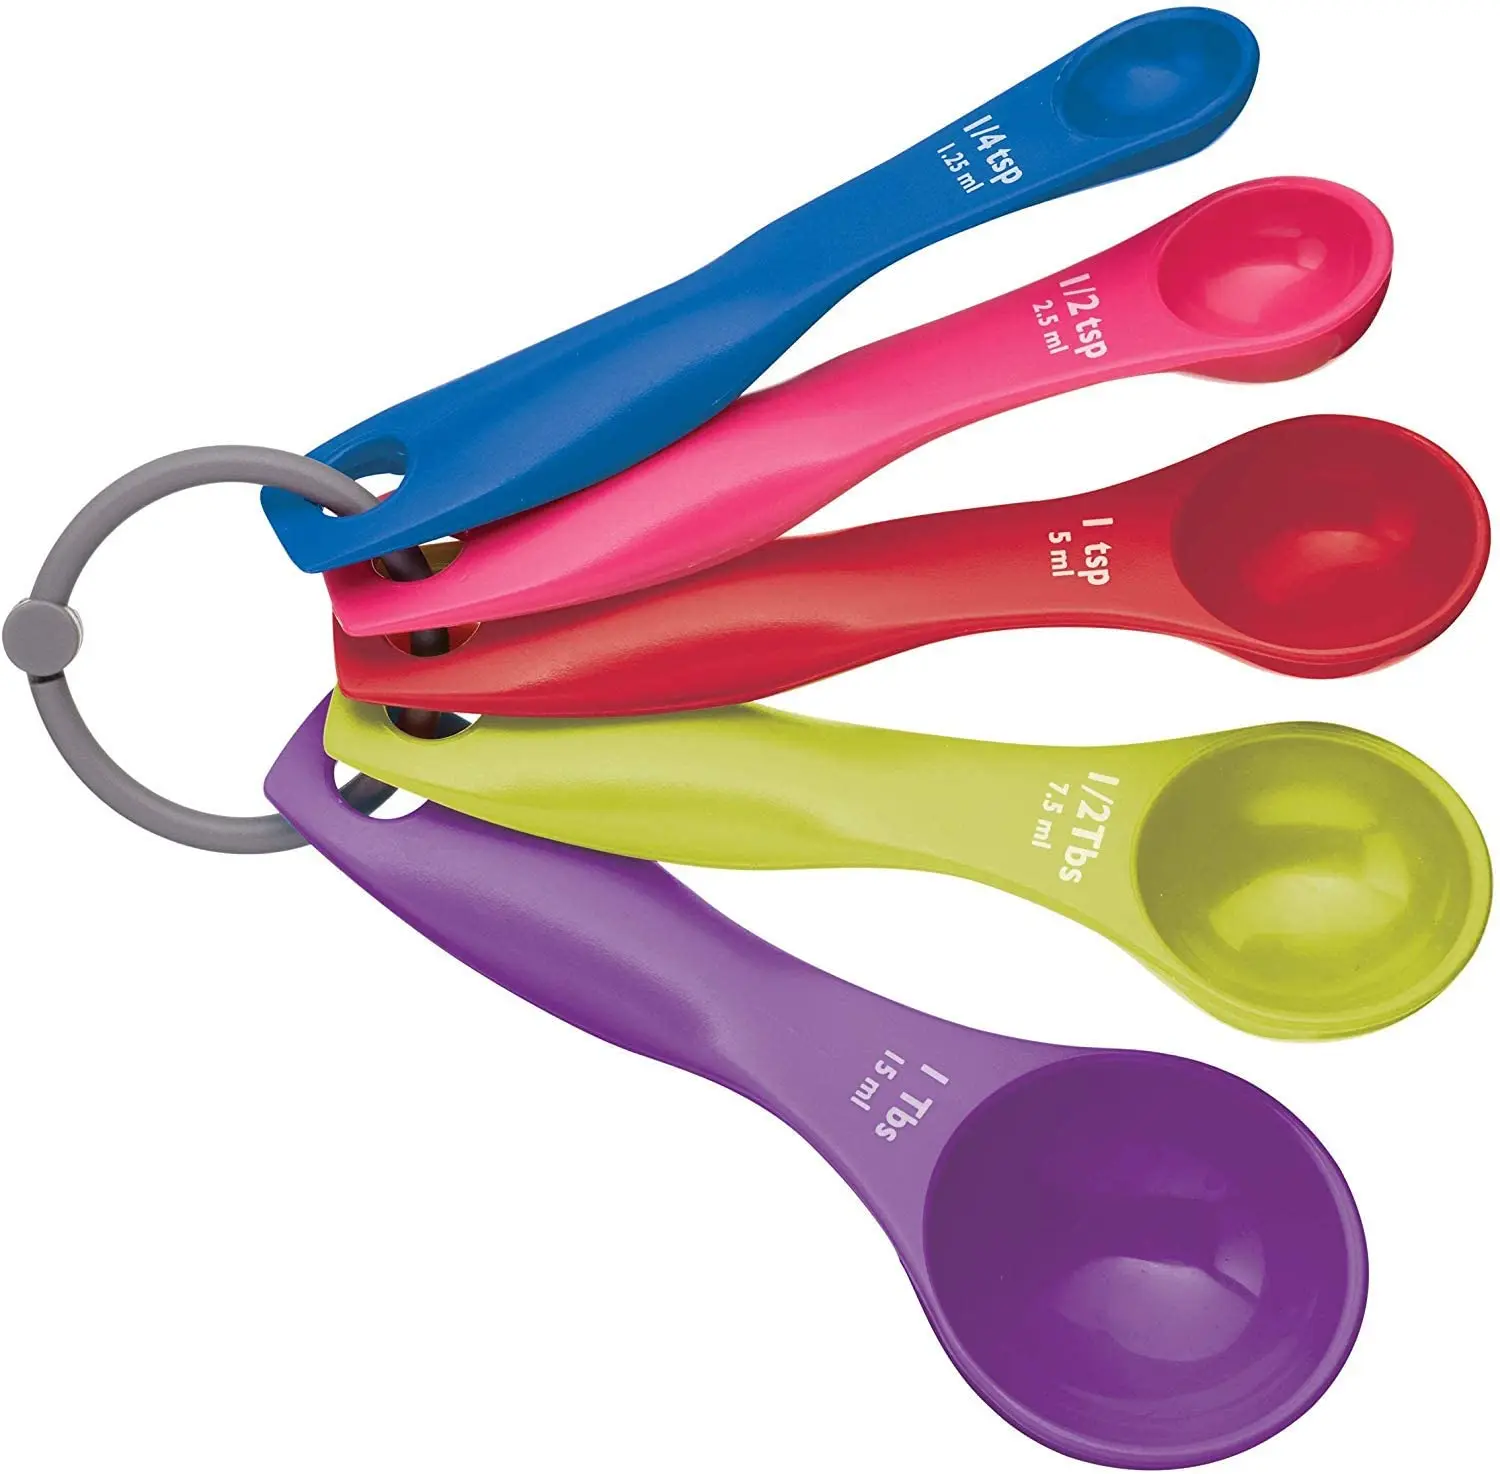 measuring spoon set